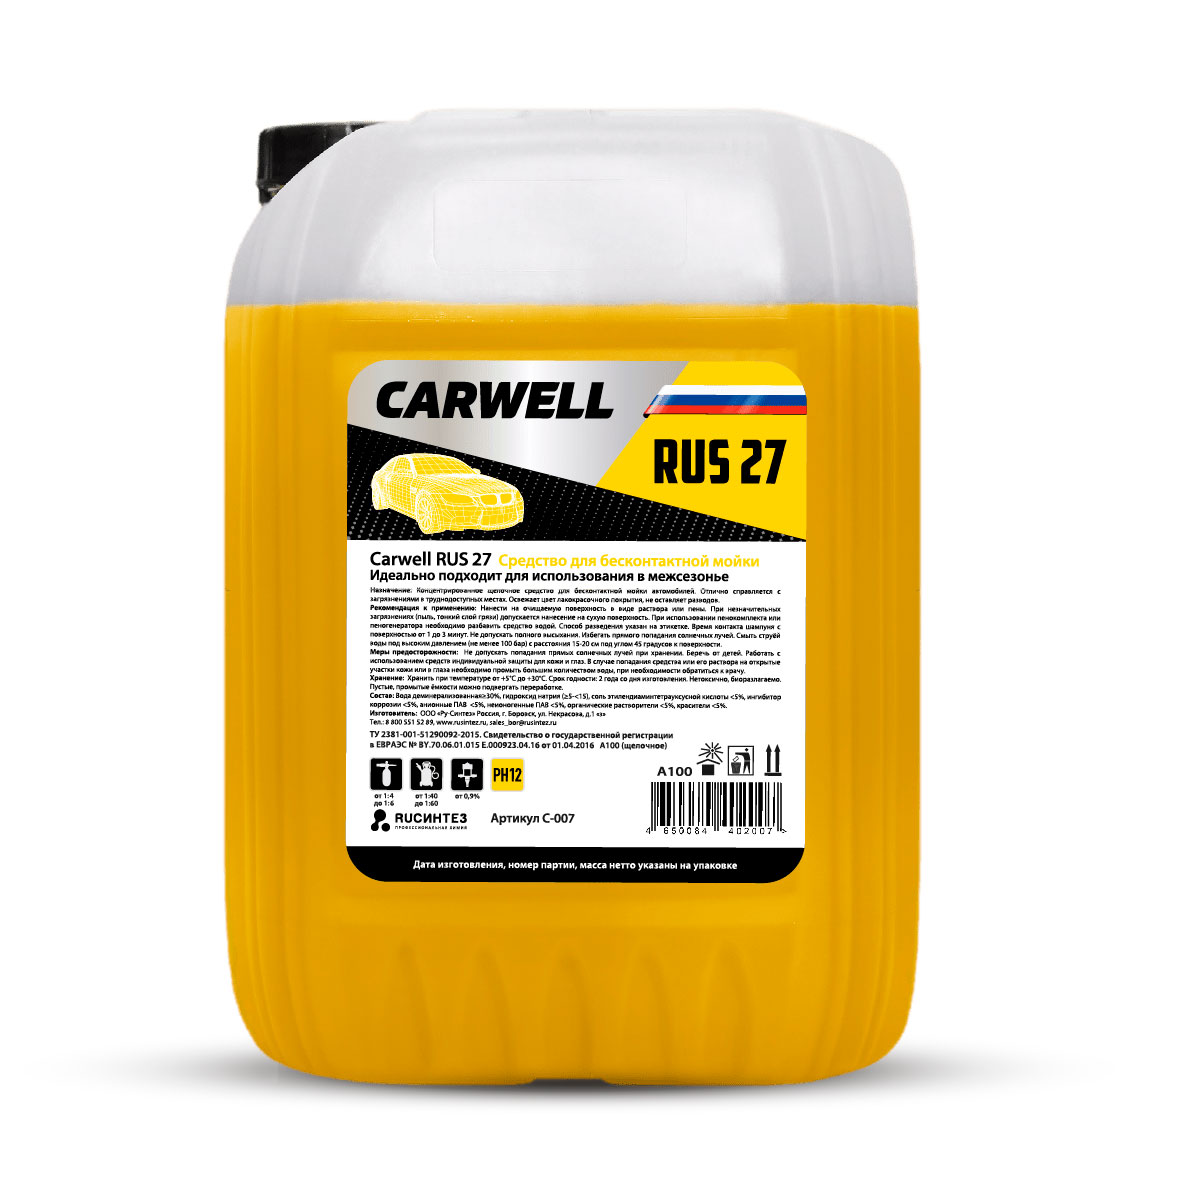 Carwell RUS 27